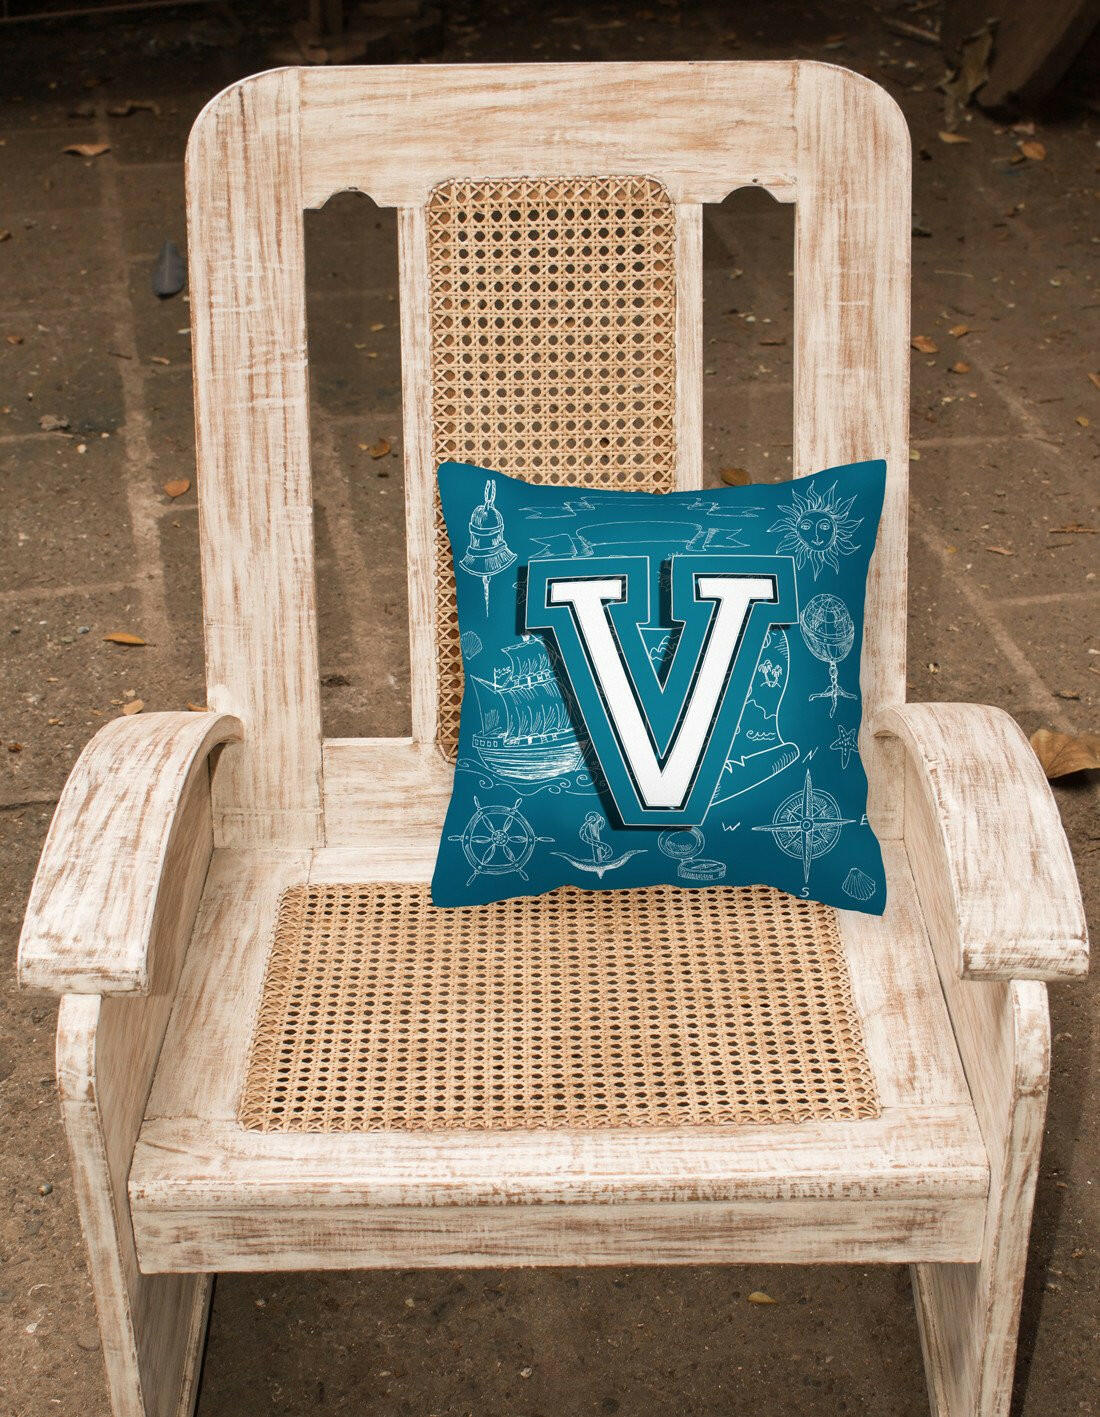 Letter V Sea Doodles Initial Alphabet Canvas Fabric Decorative Pillow CJ2014-VPW1414 by Caroline's Treasures